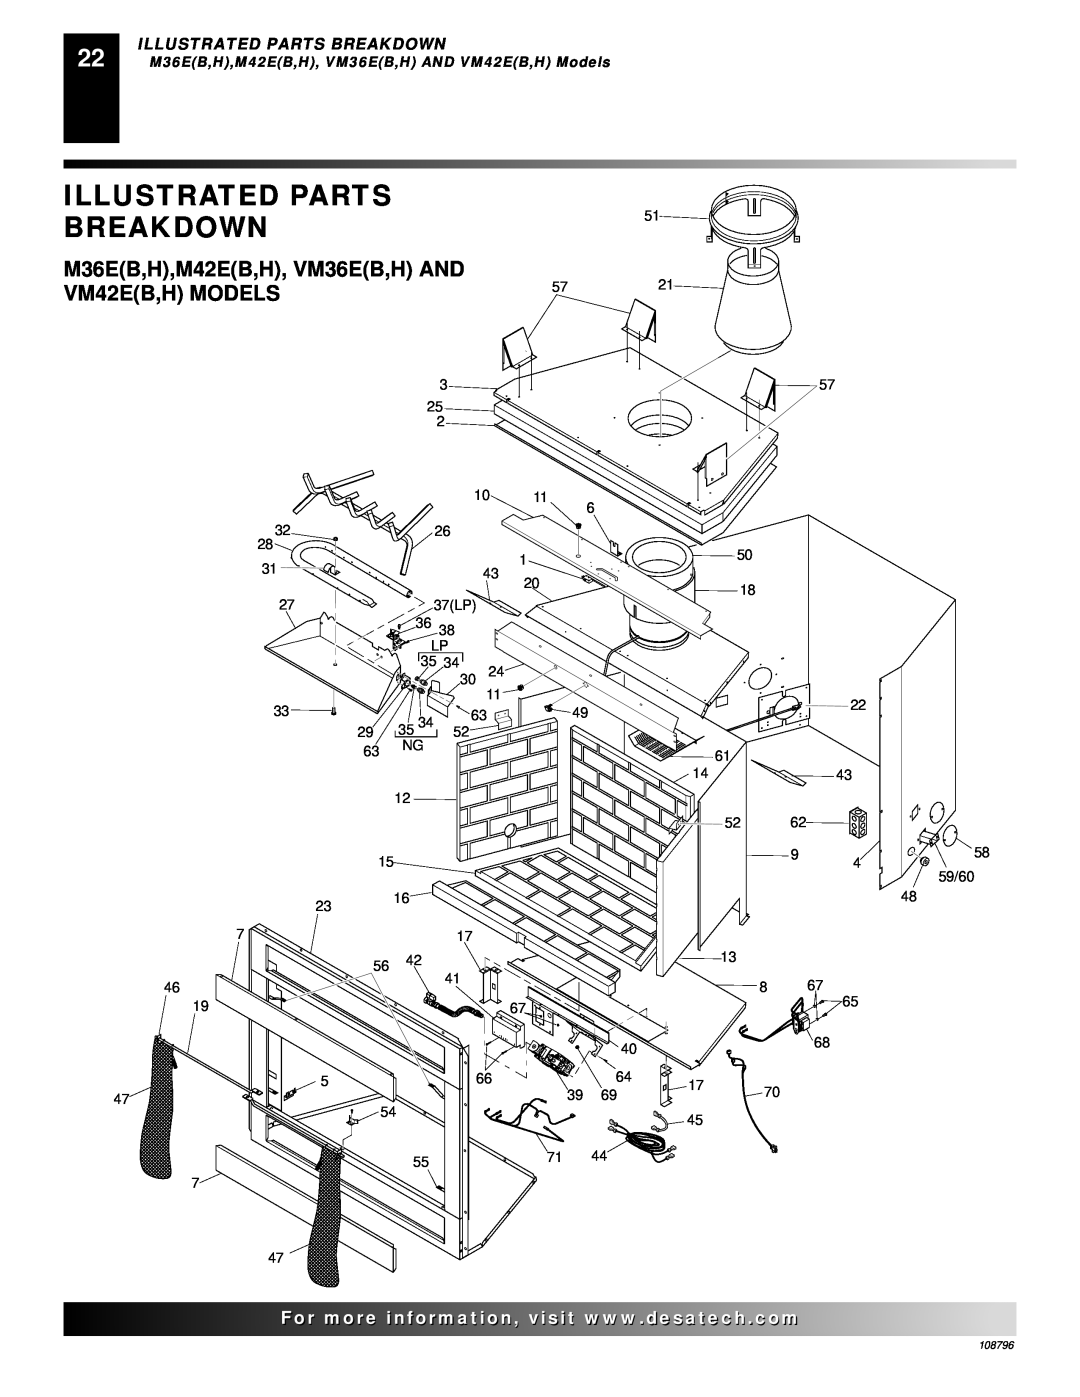 Desa installation manual M36EB,H,M42EB,H, VM36EB,H AND, VM42EB,H MODELS, Illustrated Parts Breakdown 